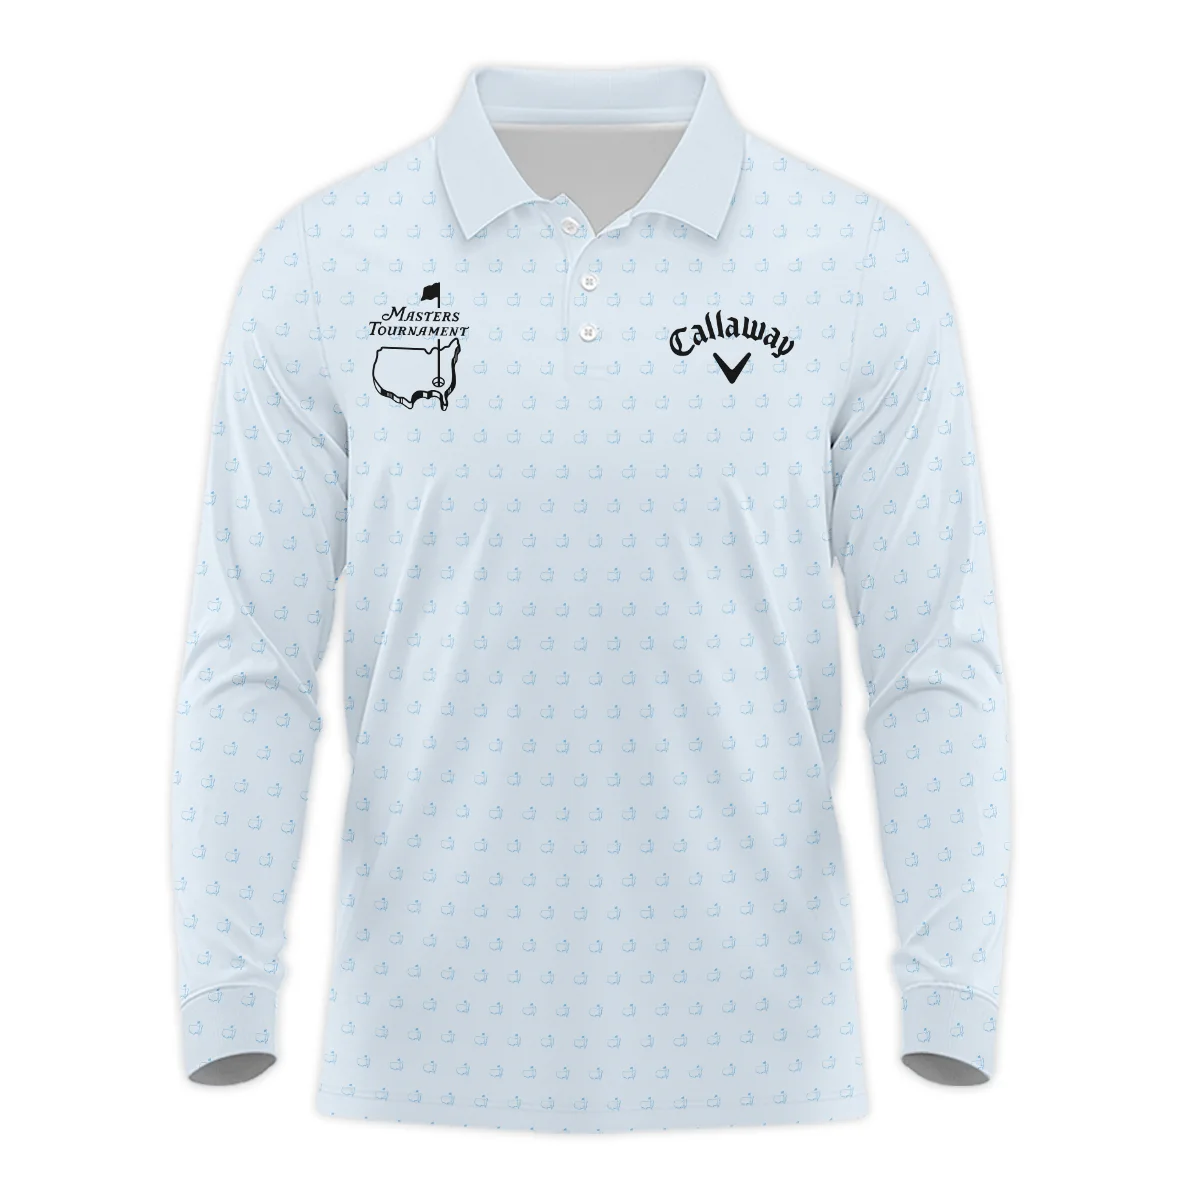 Pattern Masters Tournament Callaway Zipper Hoodie Shirt White Light Blue Color Pattern Logo  Zipper Hoodie Shirt